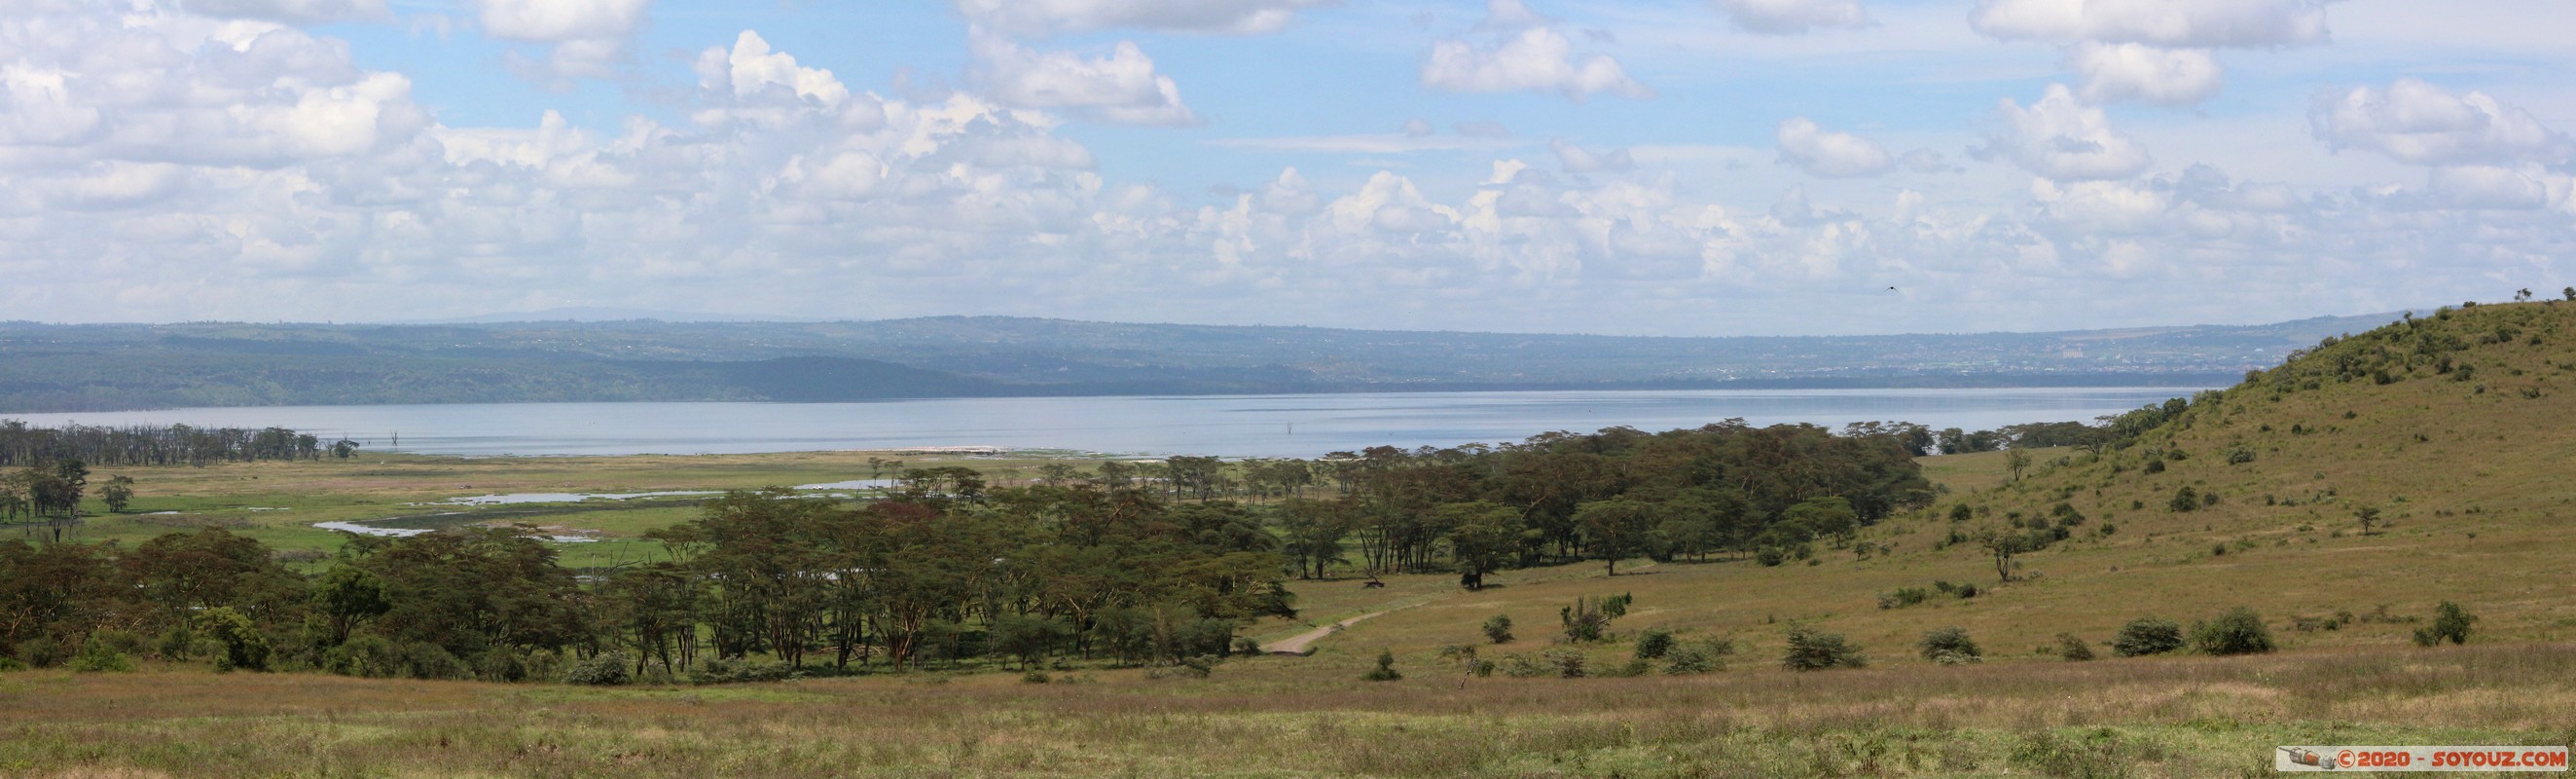 Lake Nakuru National Park - Panorama
Mots-clés: KEN Kenya Nakuru Nderit Lake Nakuru National Park Lake Nakuru Lodge panorama